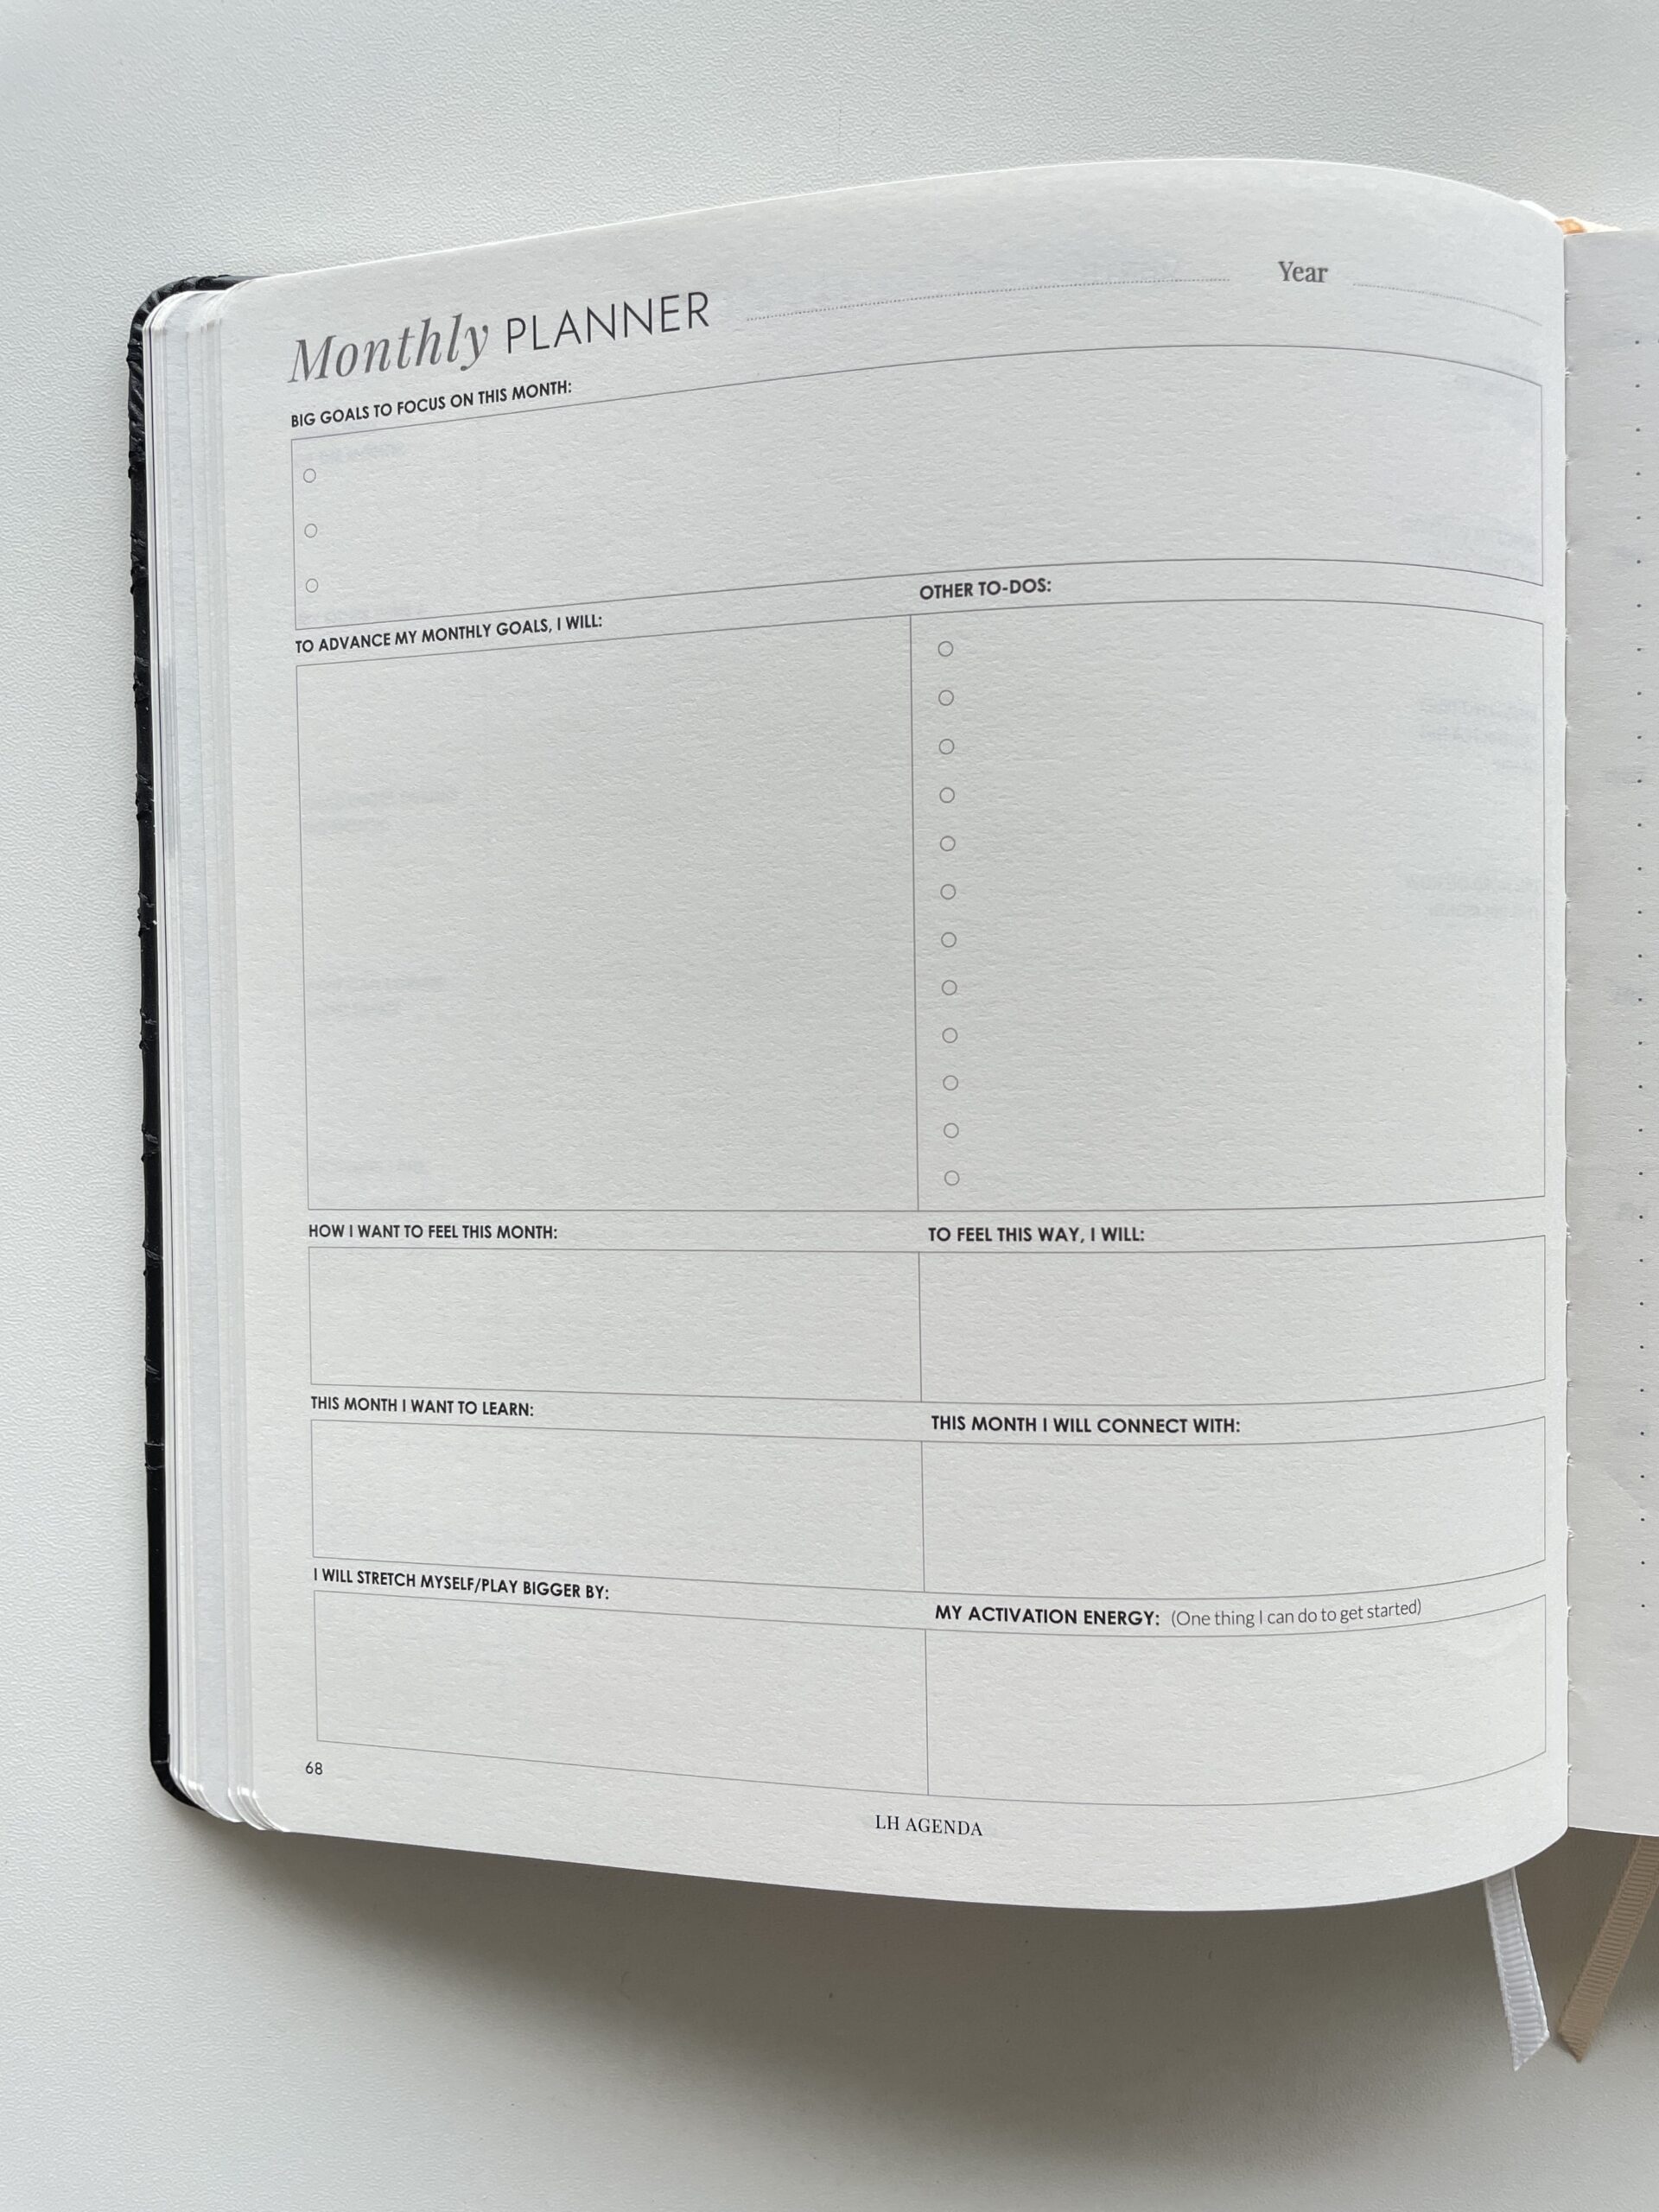 LH Agenda monthly planner personal work goals checklists simple minimalist layout large sewn bound planner